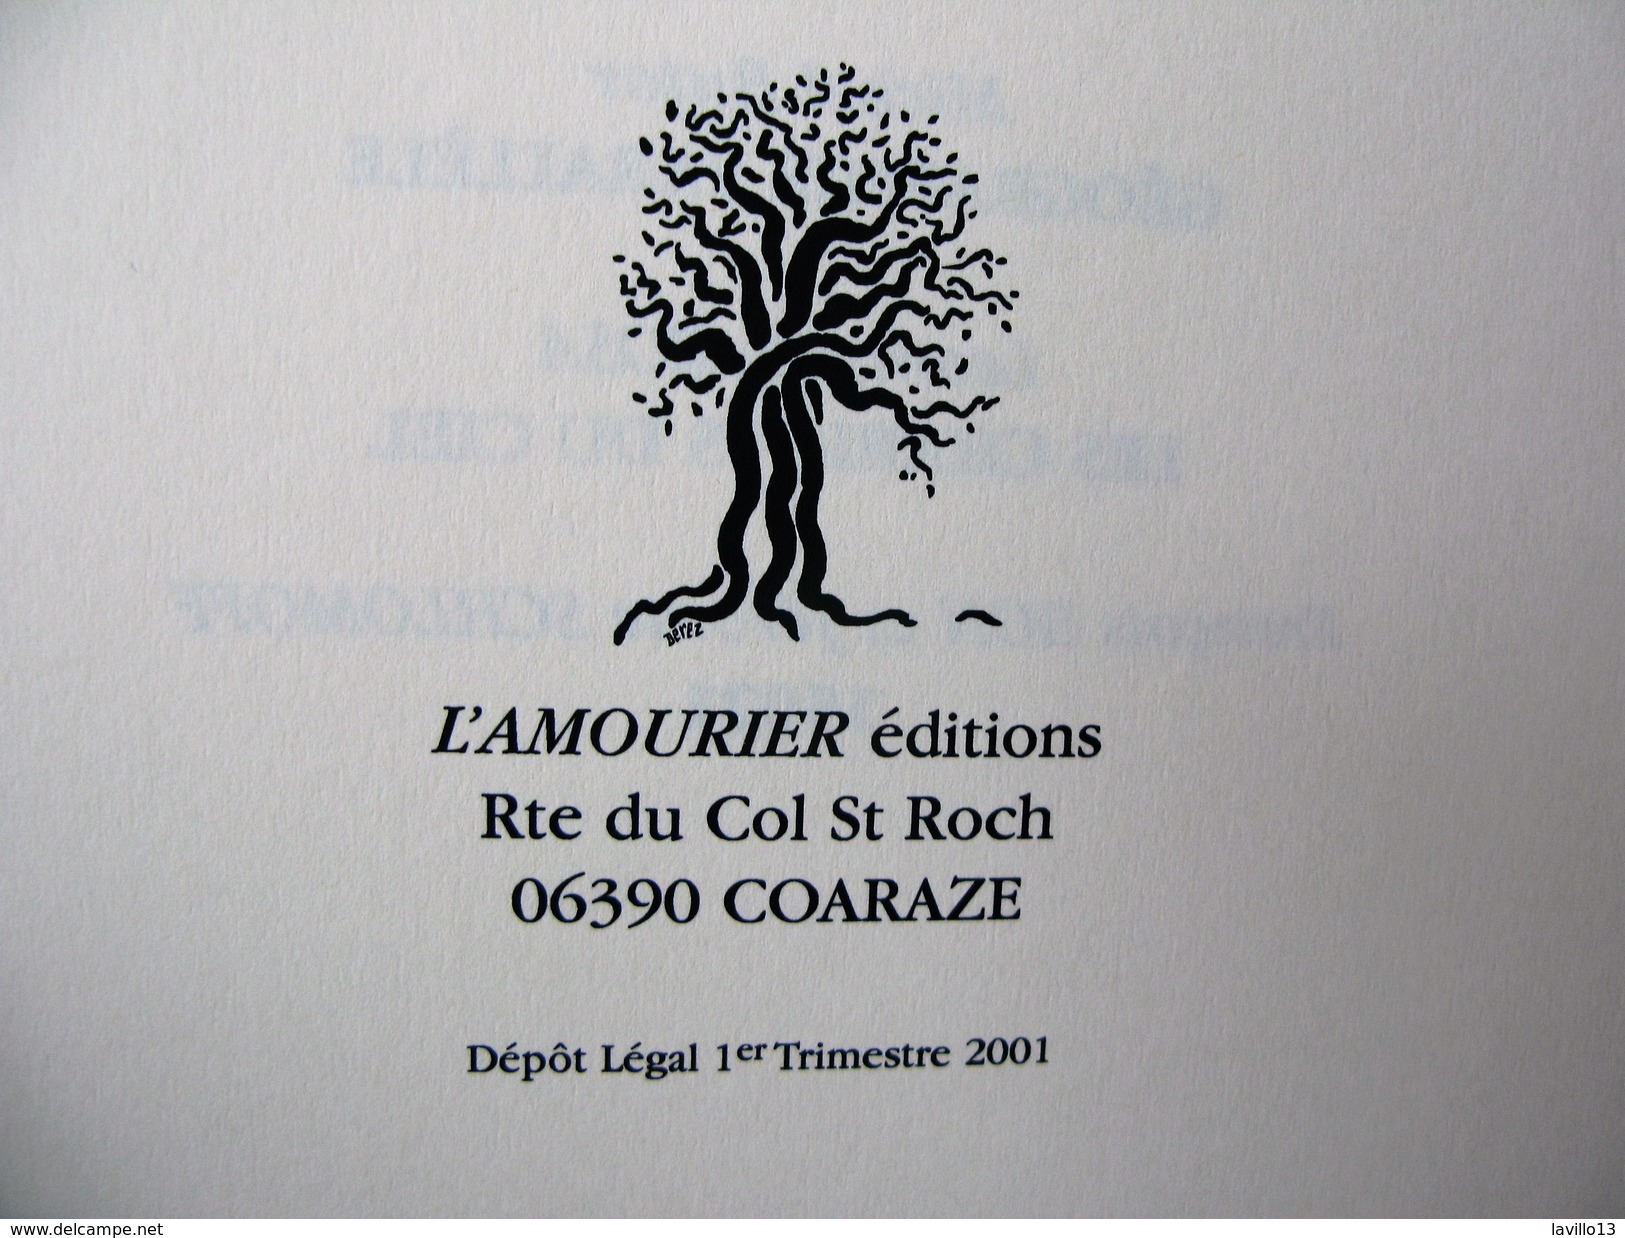 CARNETS " NOCES ERRATIQUES" FRANK LALOU Edts L'AMOURIER. COARAZE. 2001 - Grafica & Design